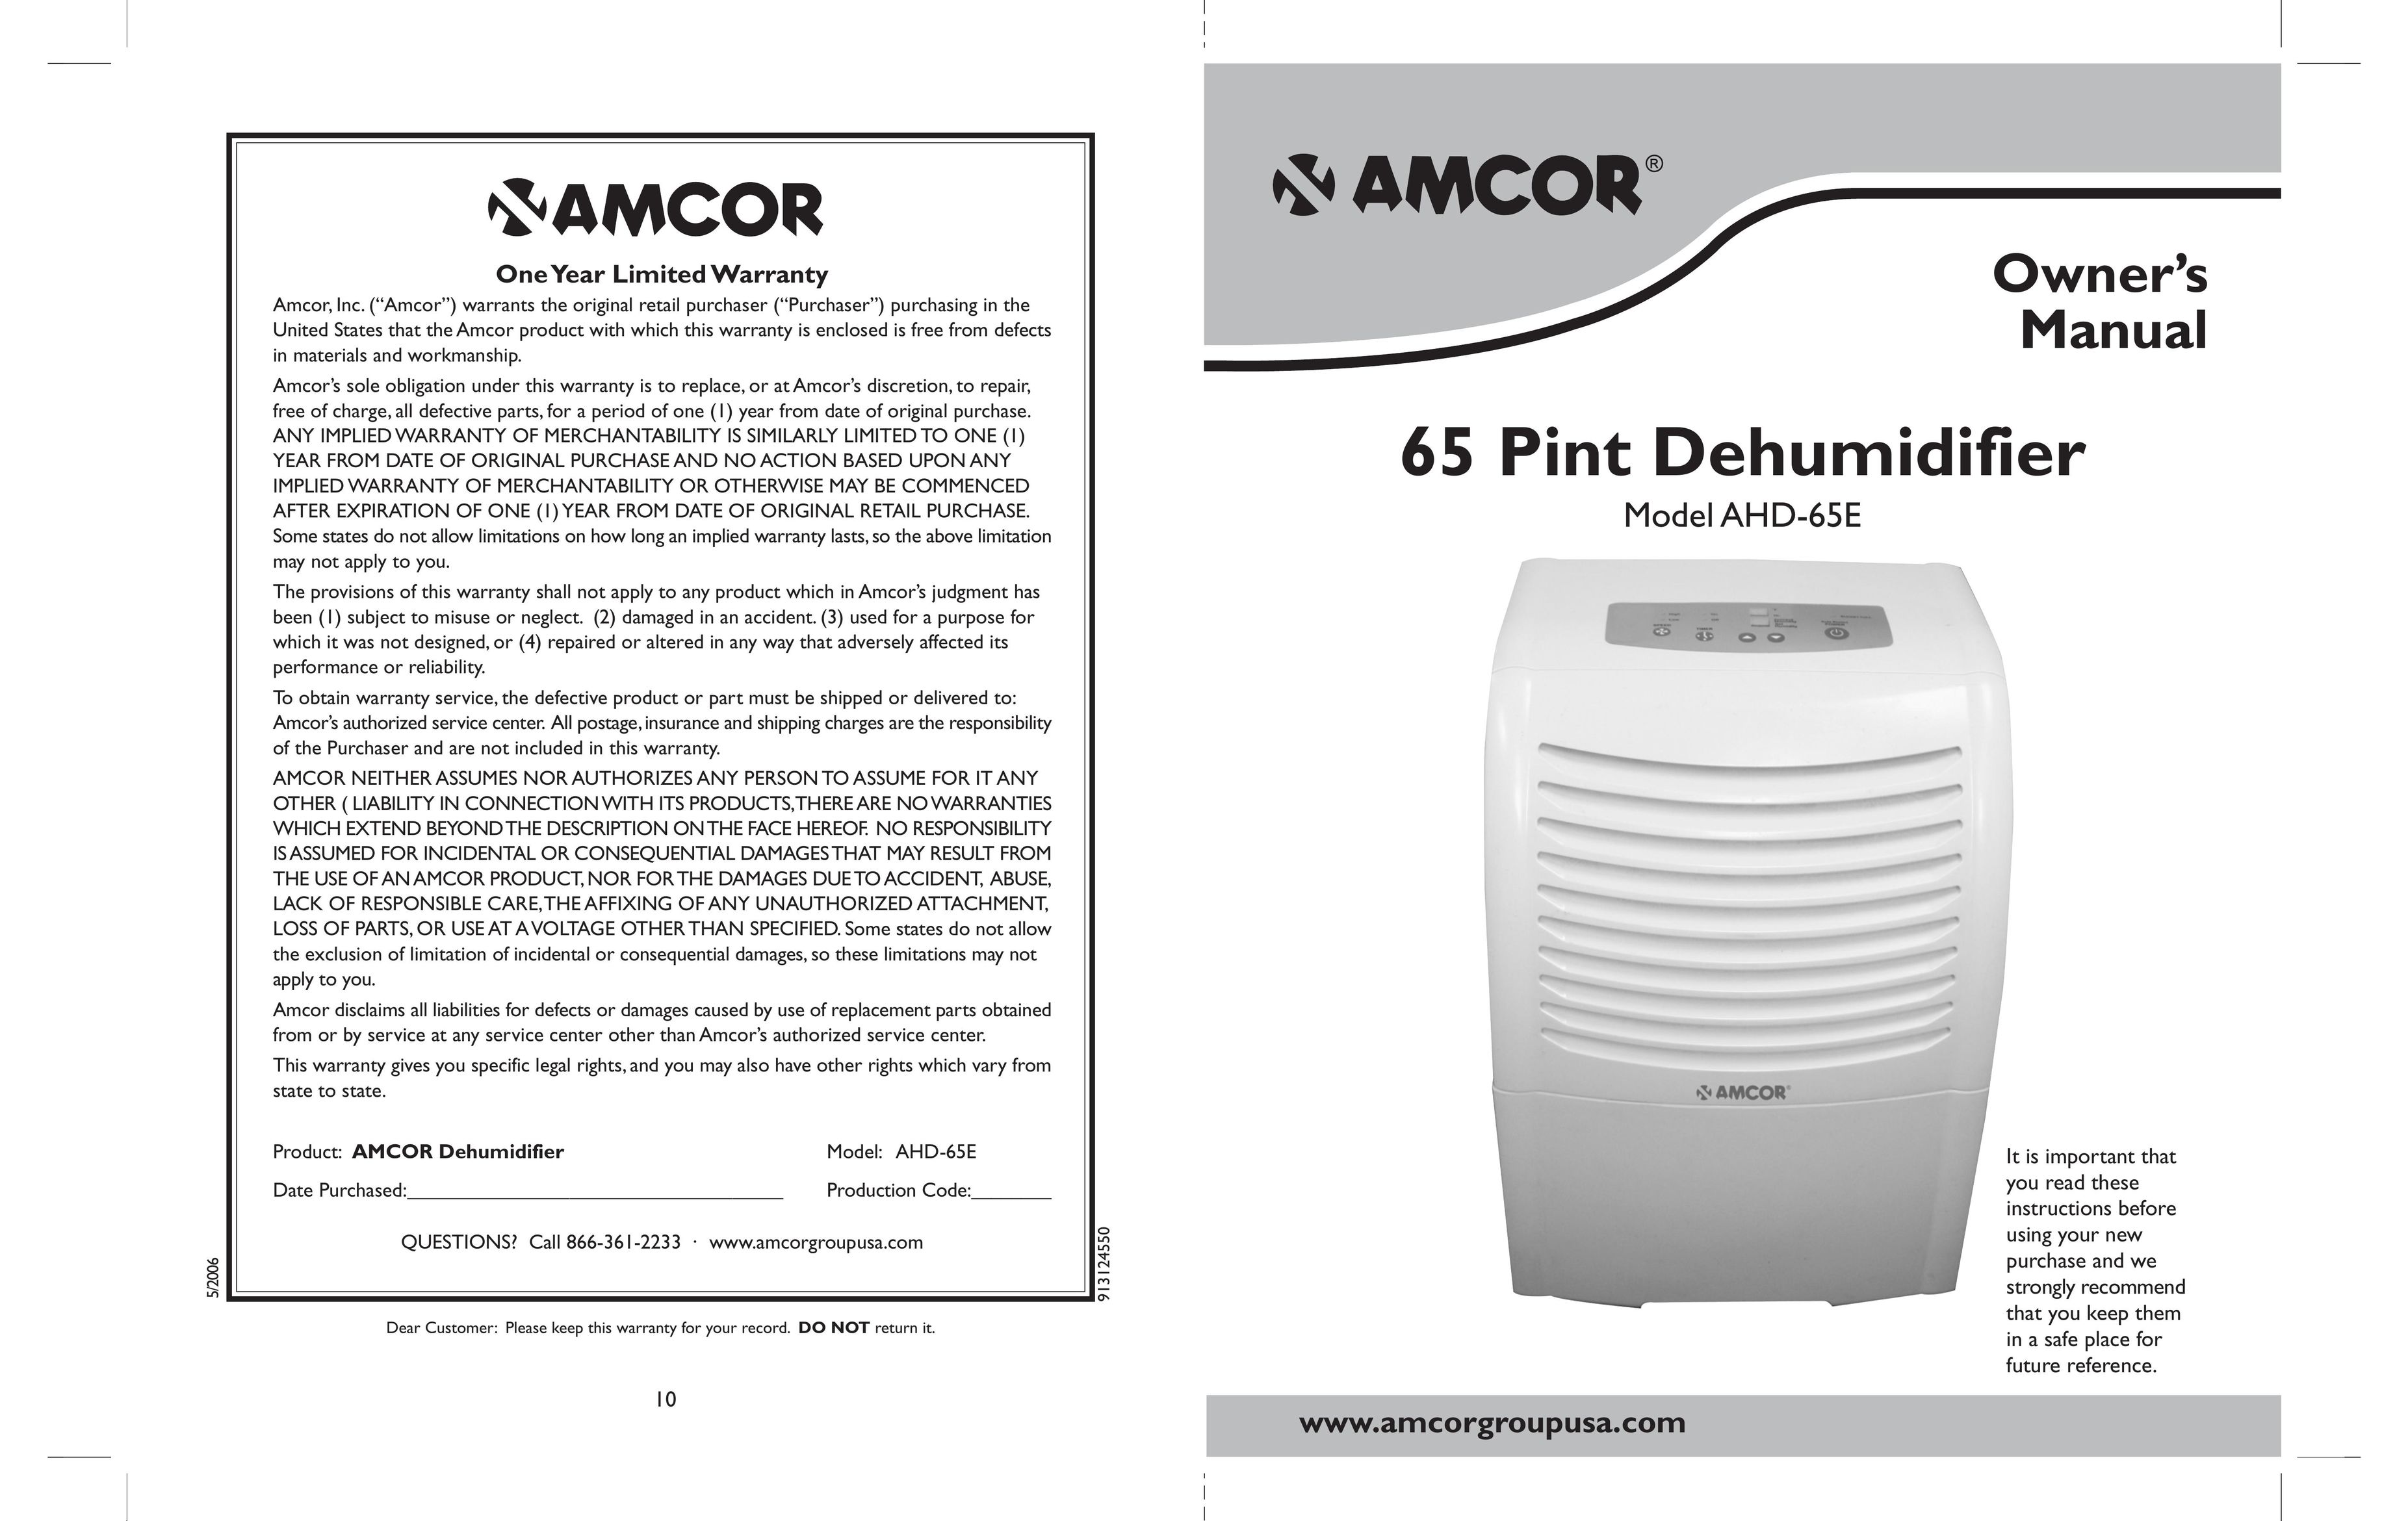 Amcor AHD-65E Dehumidifier User Manual